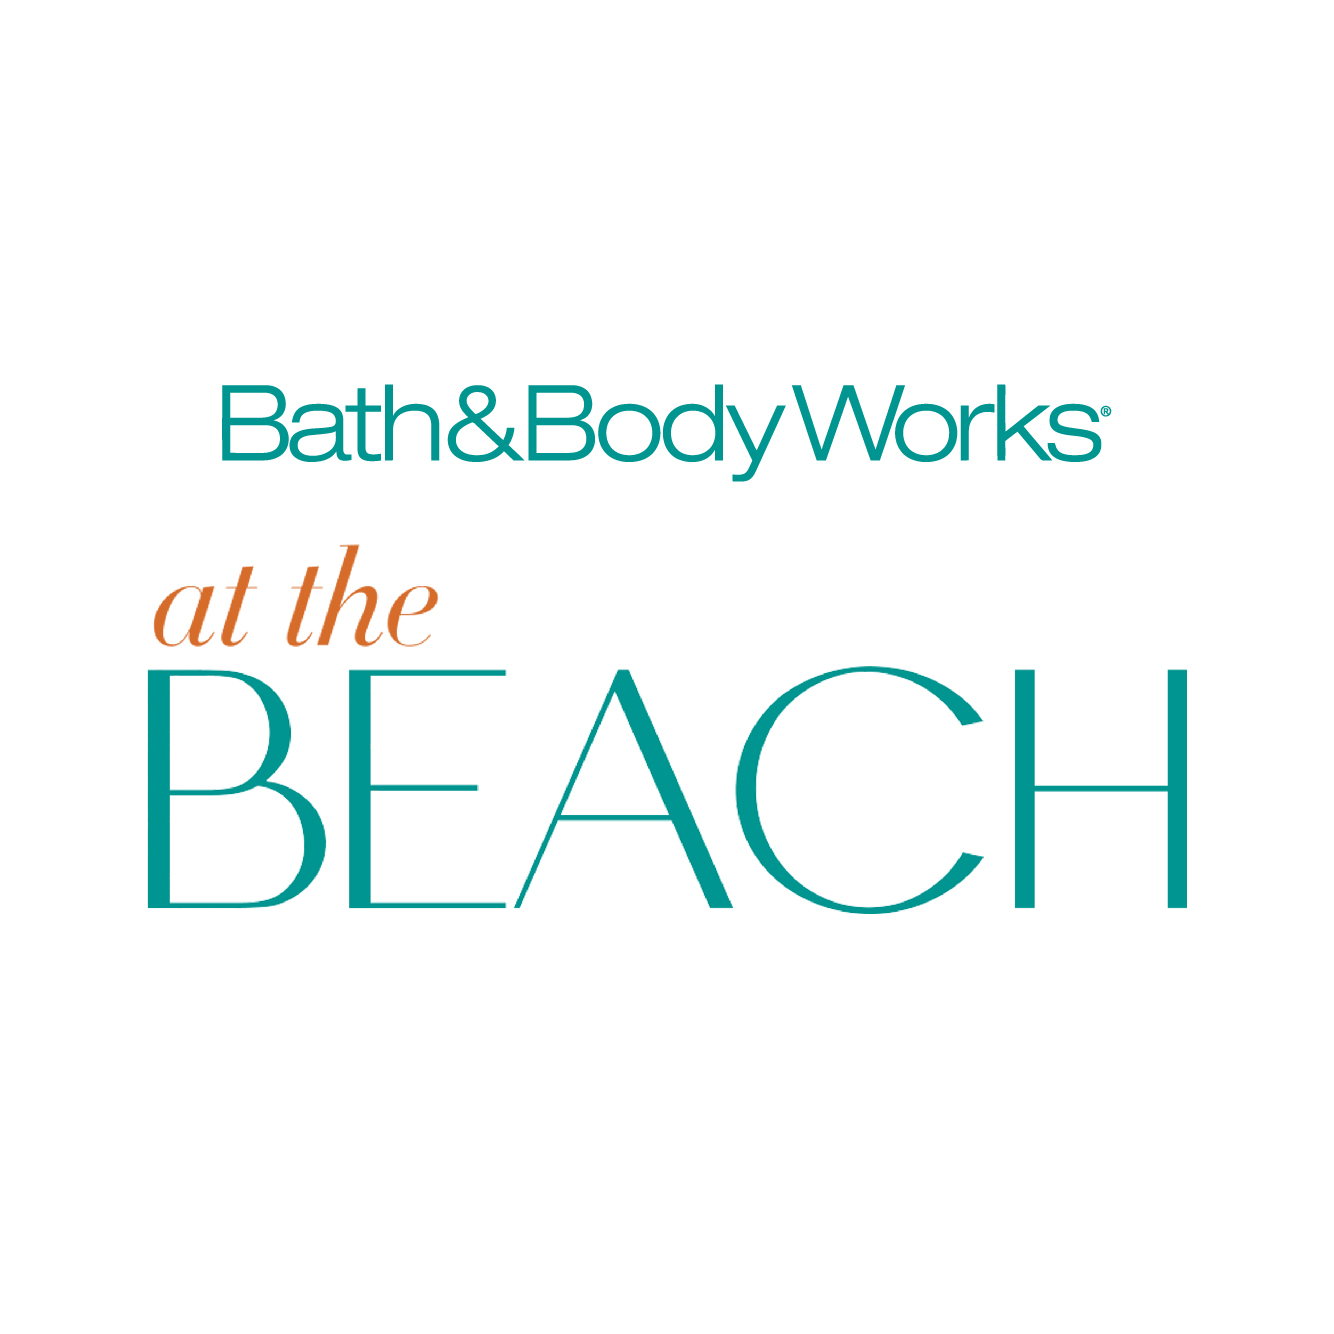 Bath & Body Works At the Beach